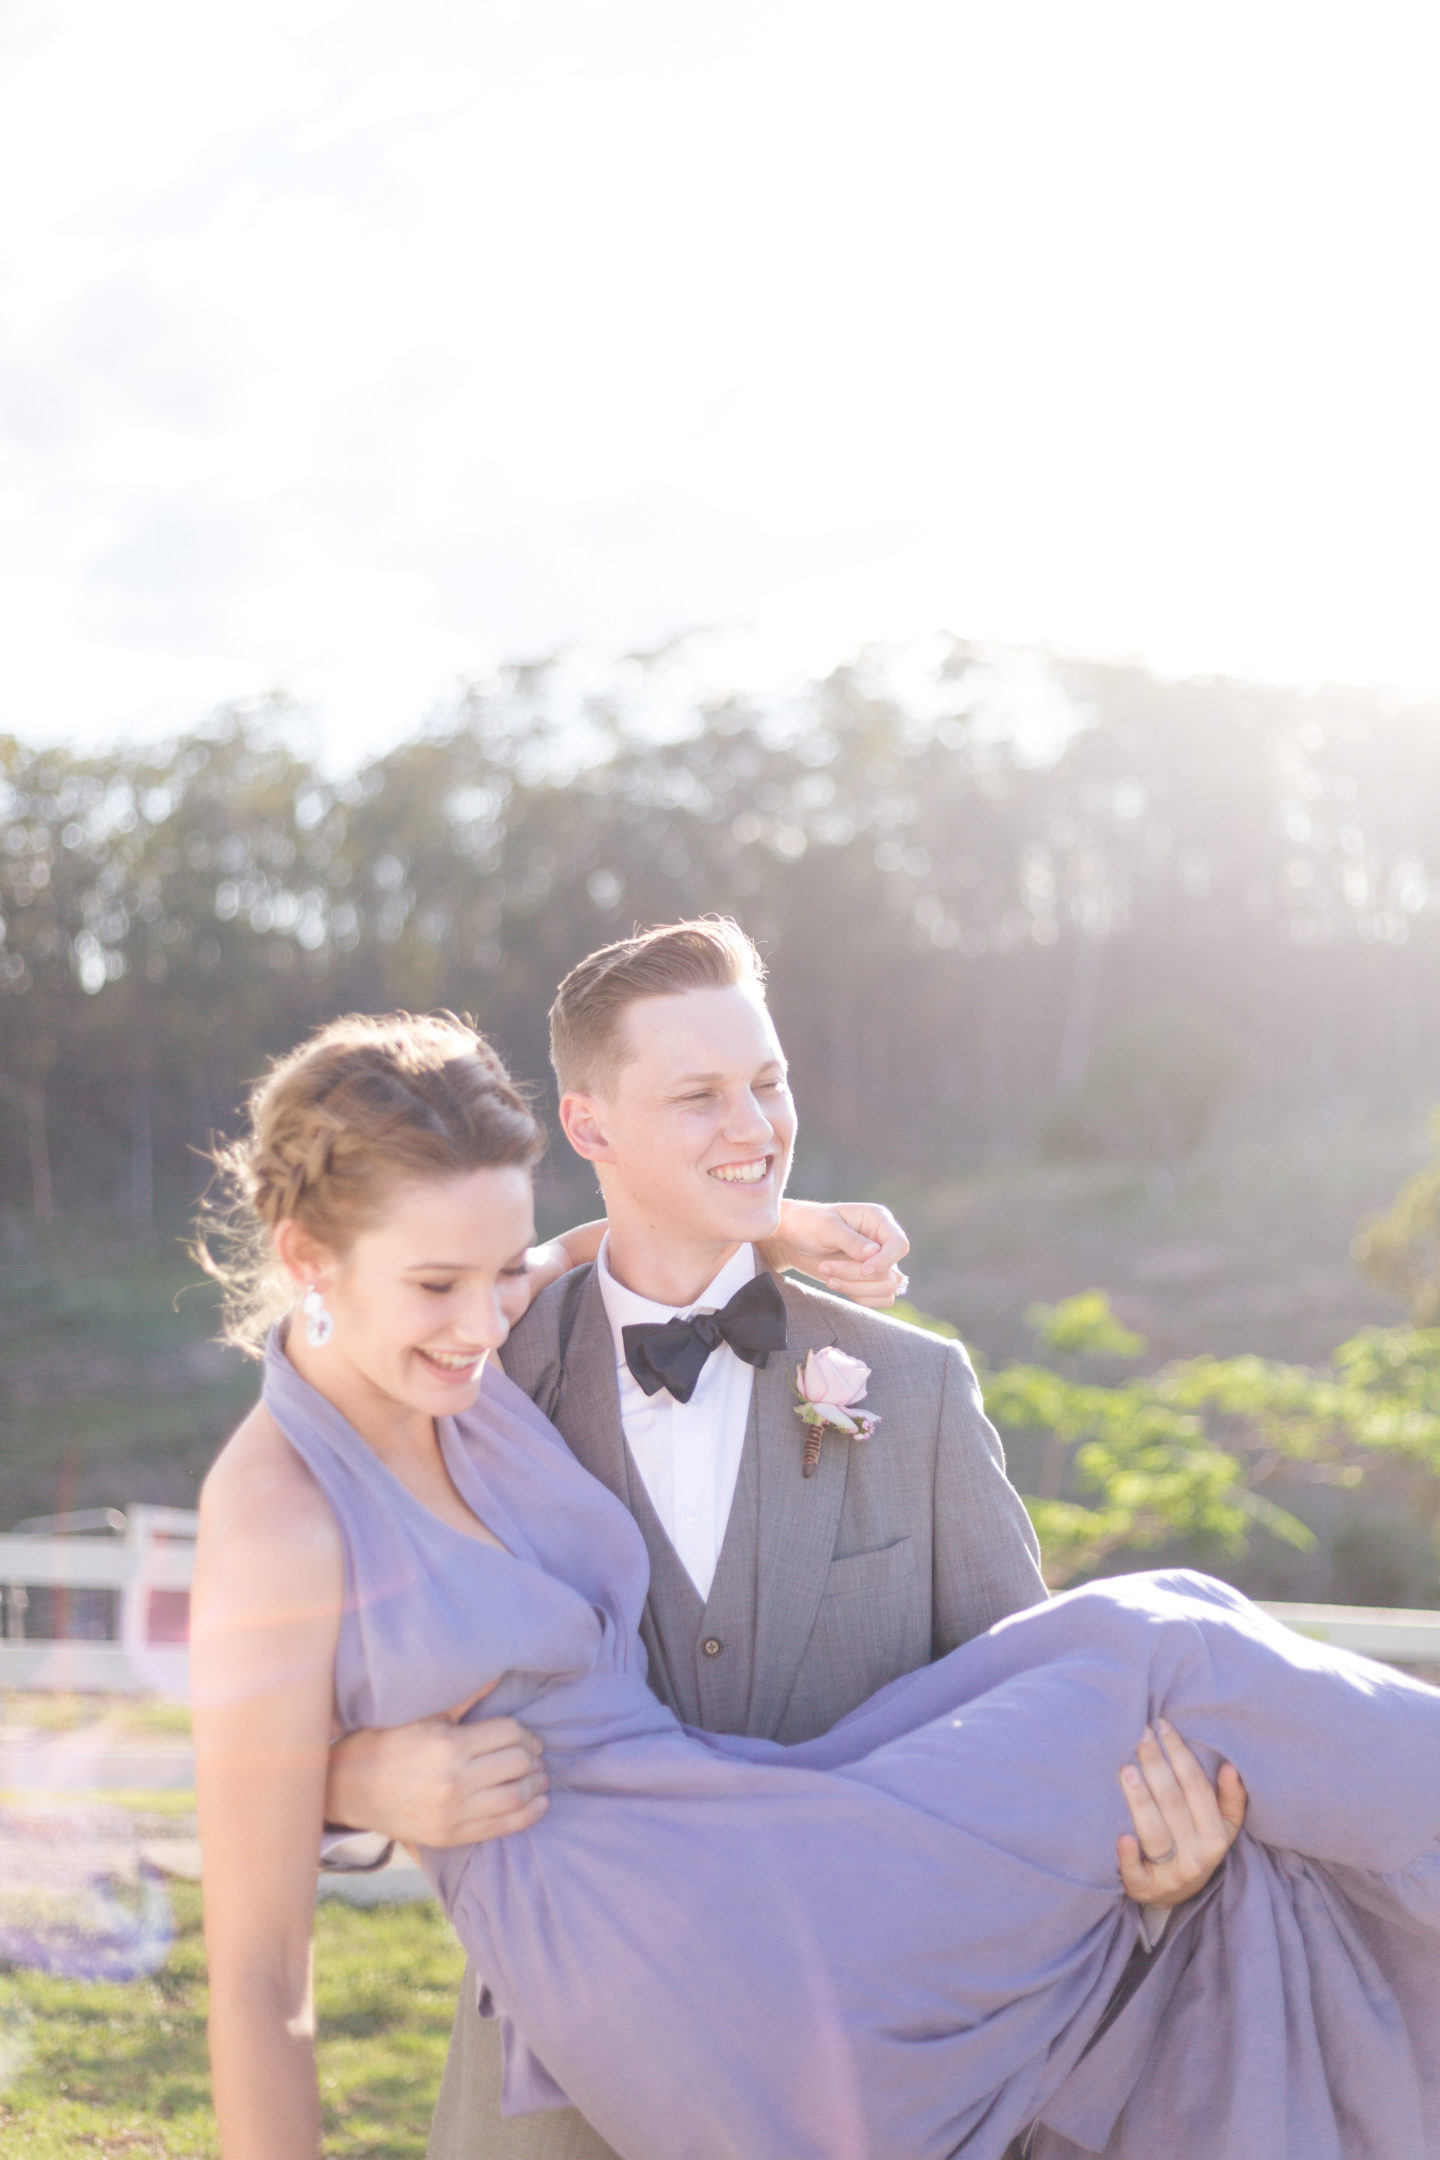 Jacaranda Wedding Inspiration With Intimate Vibes at Branell Homestead, Australia